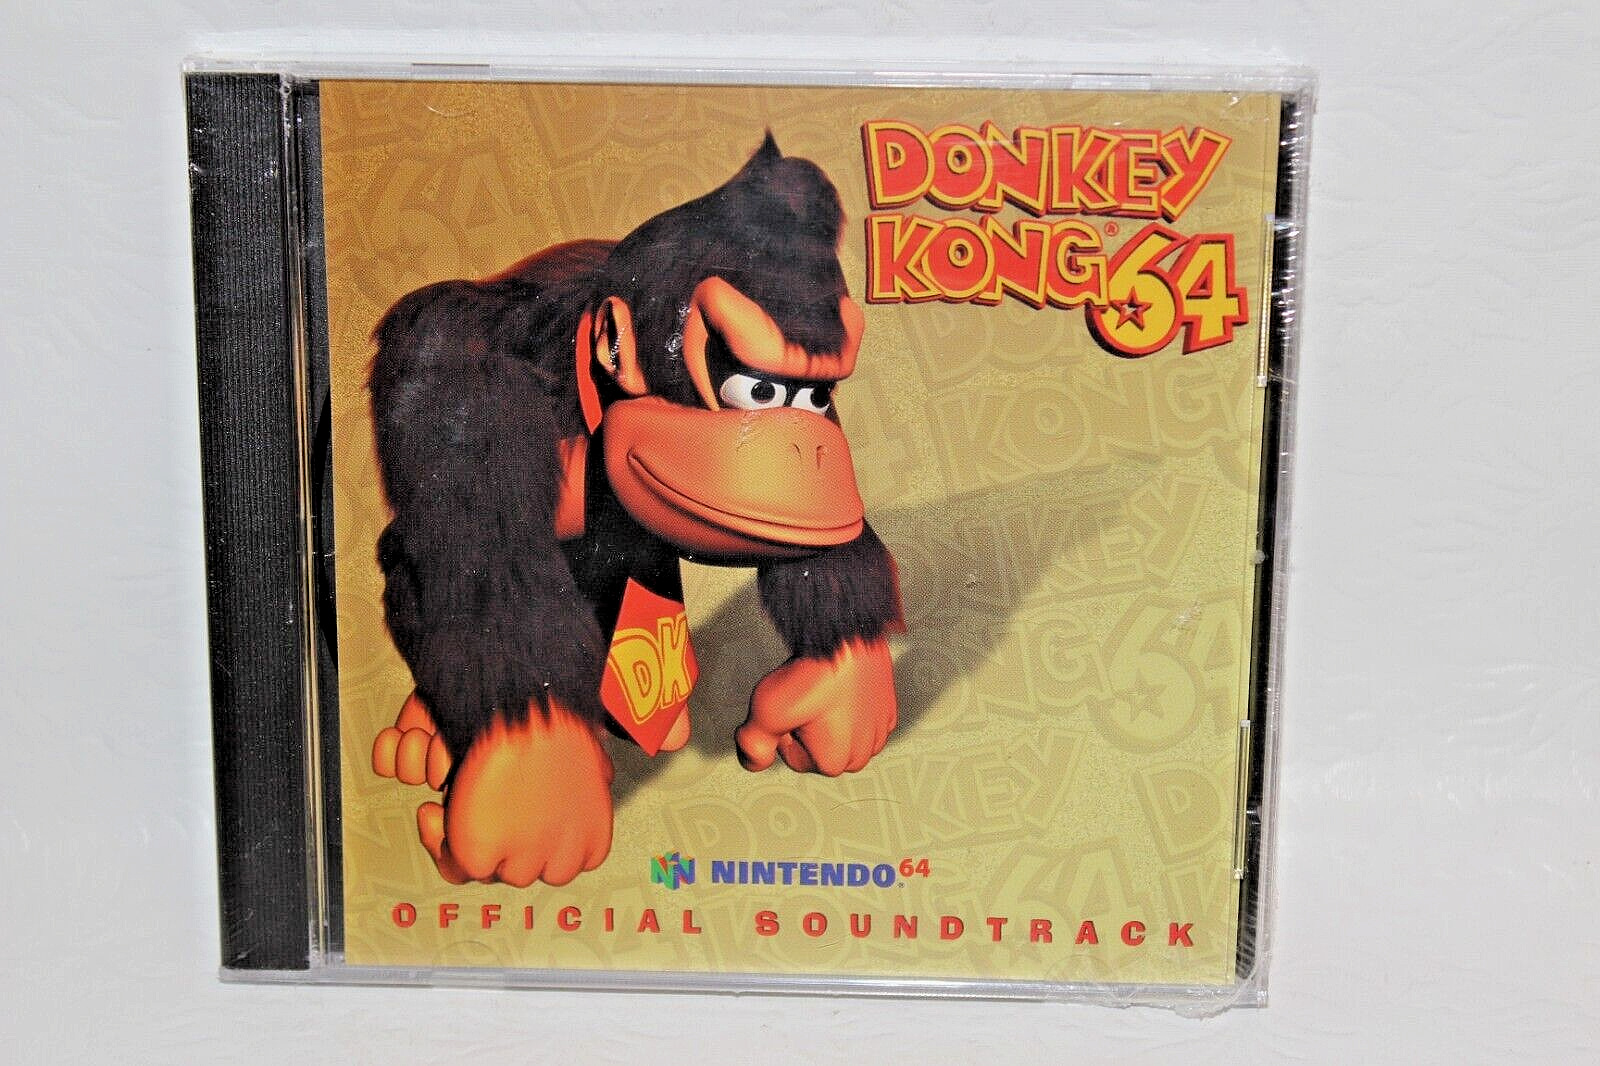 RARE NEW SEALED DONKEY KONG 64 NINTENDO 64 OFFICIAL SOUNDTRACK CD GRANT KIRKHOPE